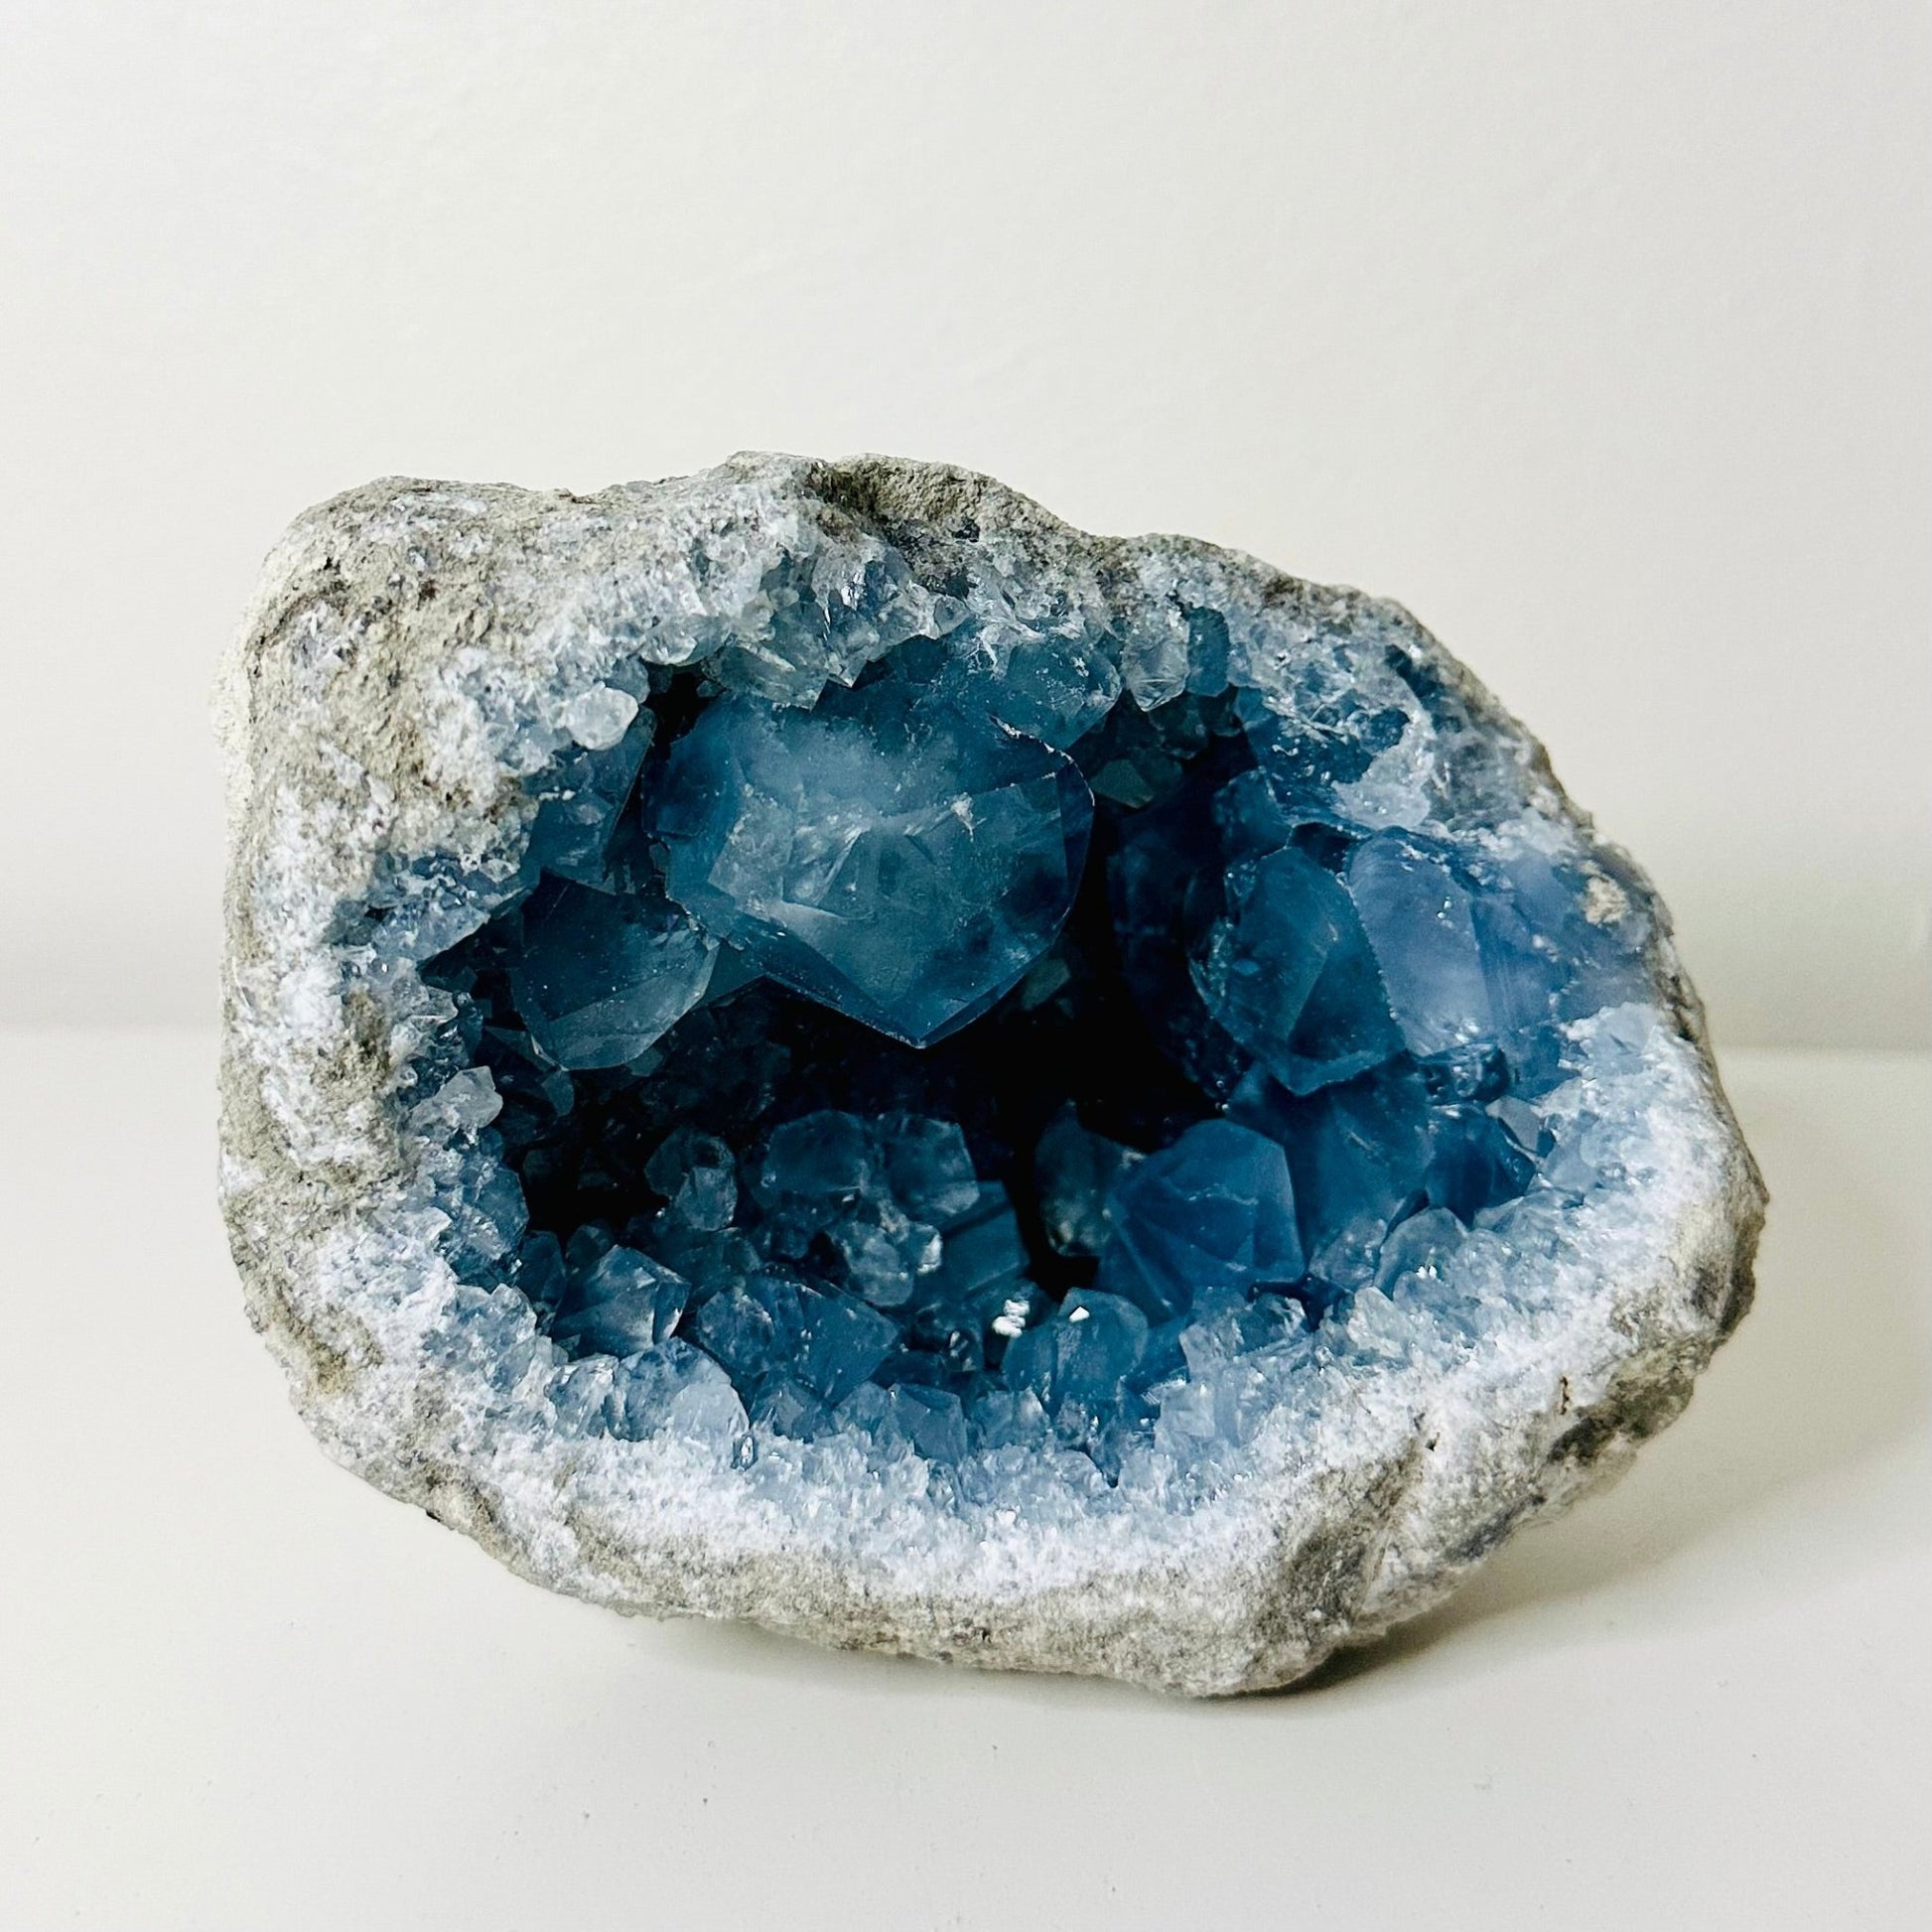 Raw Celestite Geode - Stunning Blue Crystals - Natural Specimen from Madagascar ~4.2lbs/1.9kg - KREATEUR MIAMI